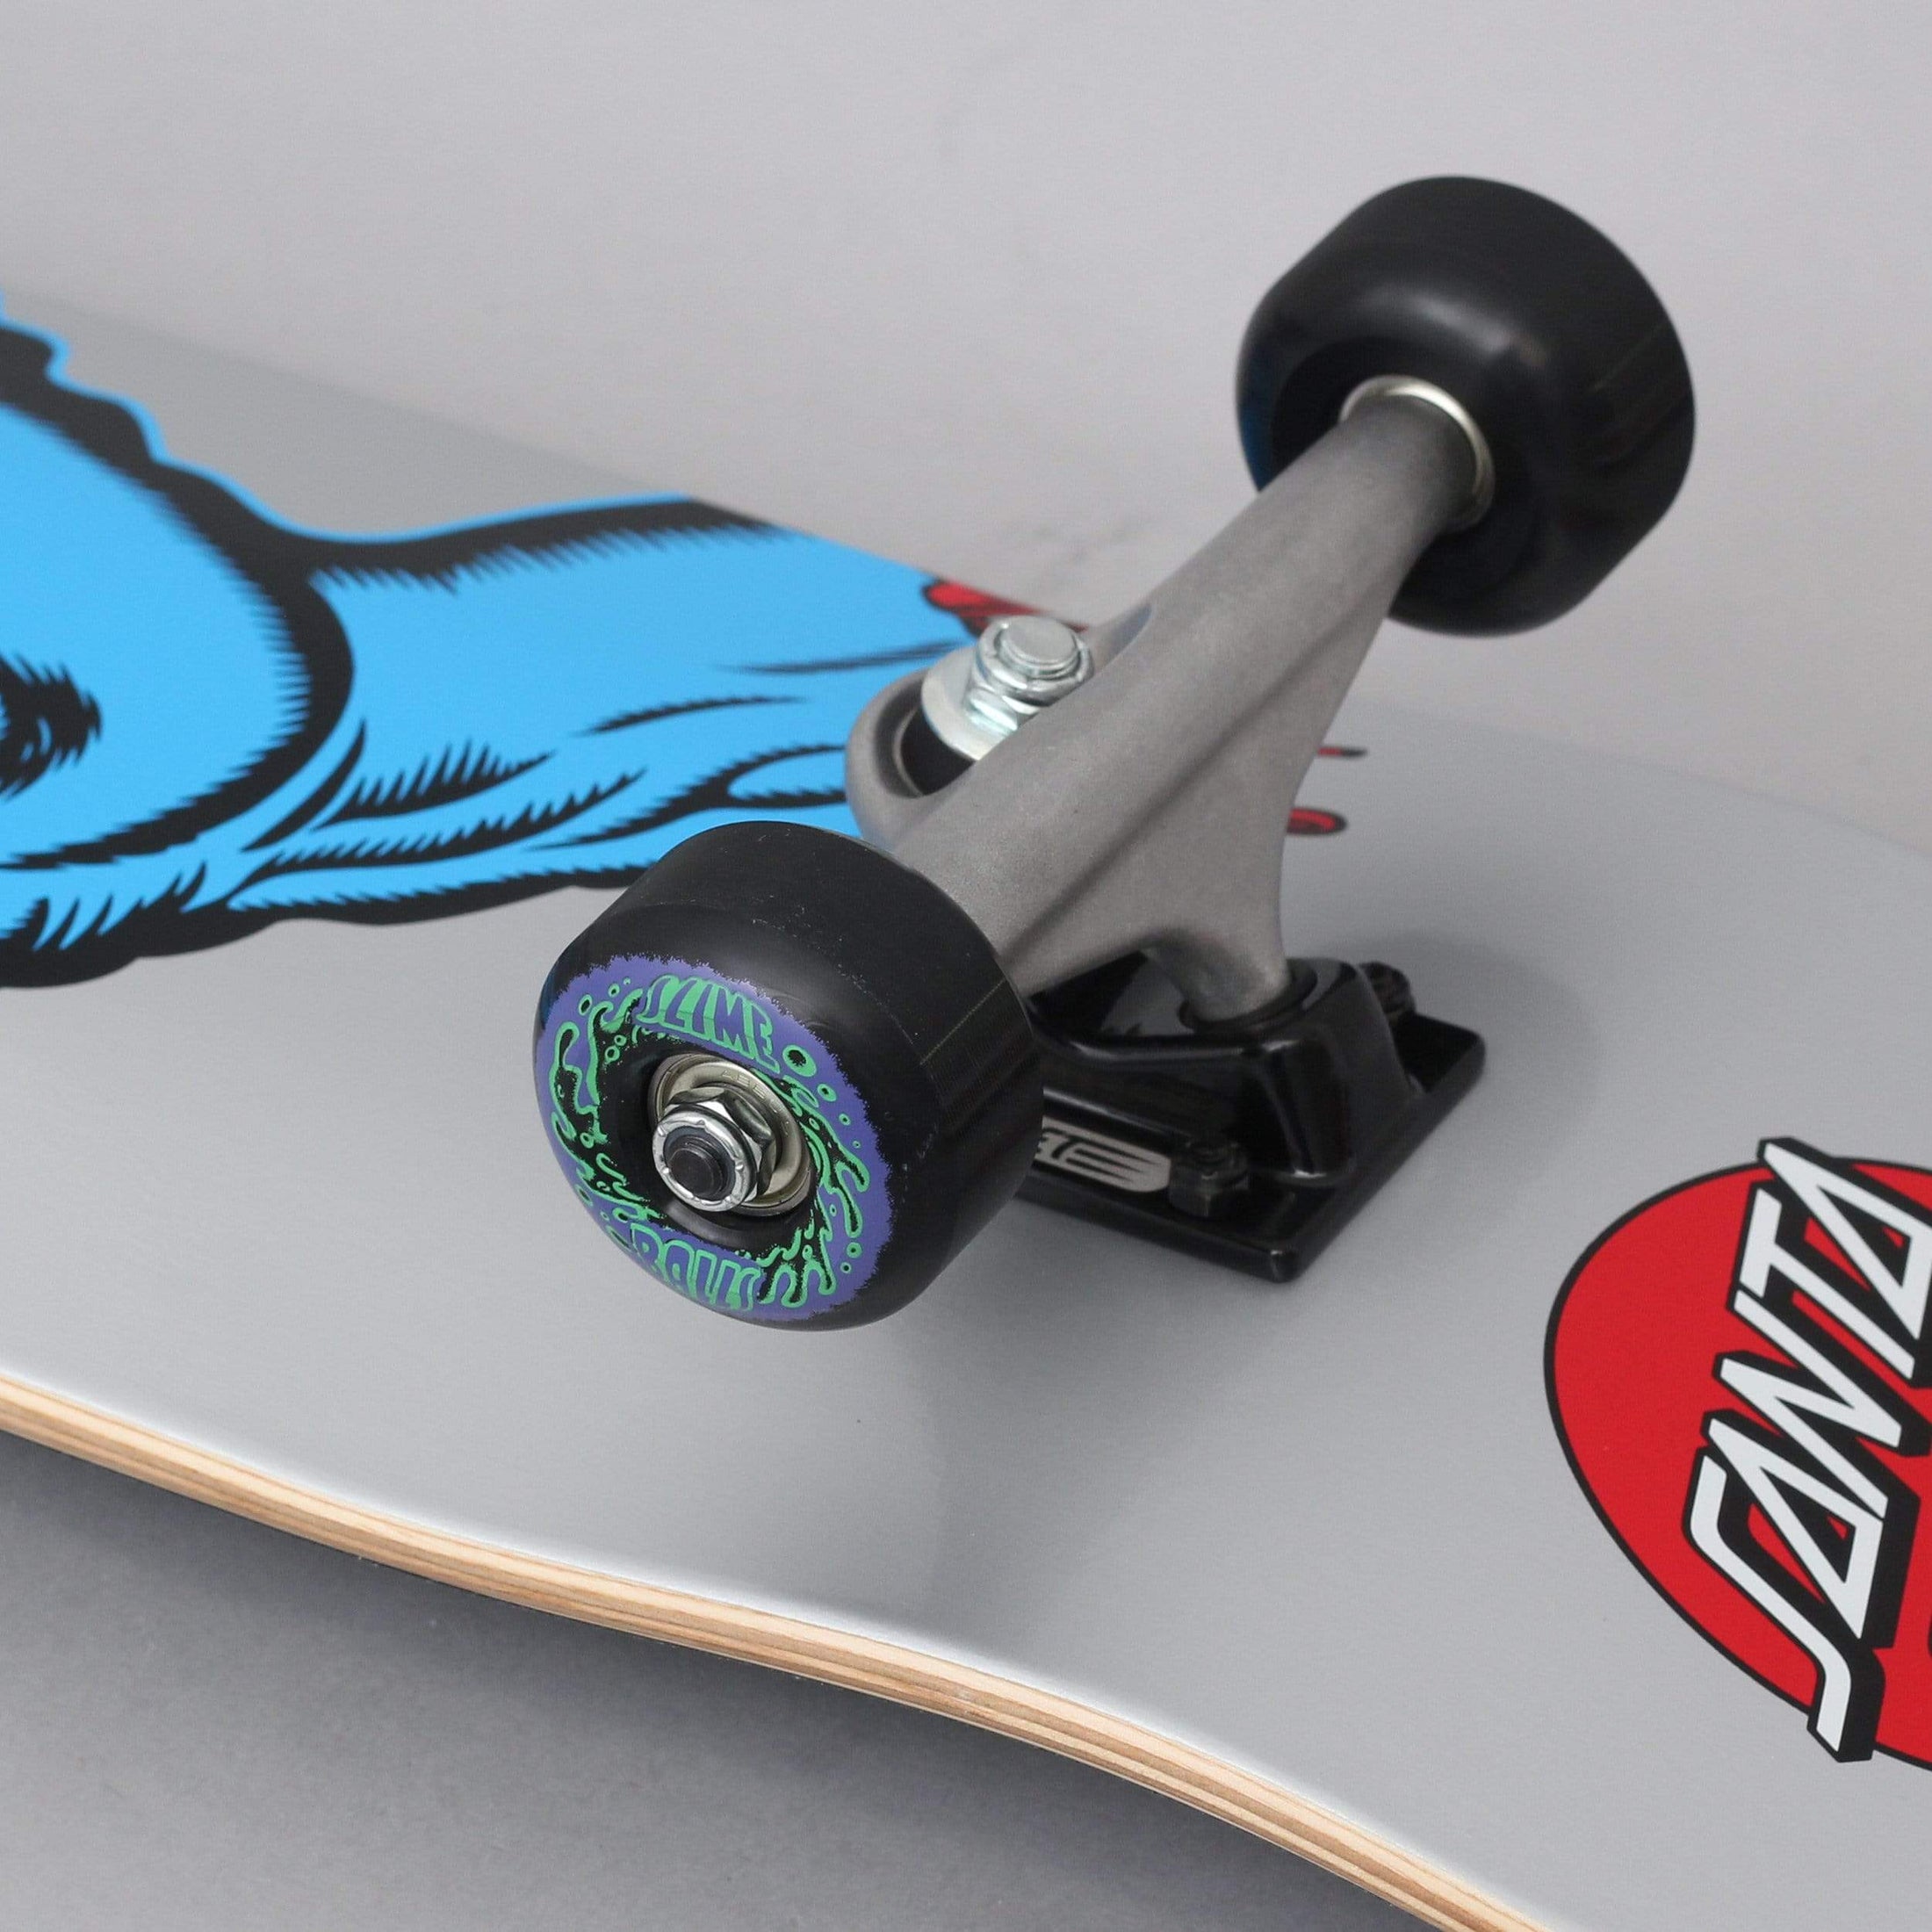 Santa Cruz 8.25 Screaming Hand Complete Skateboard Silver / Blue